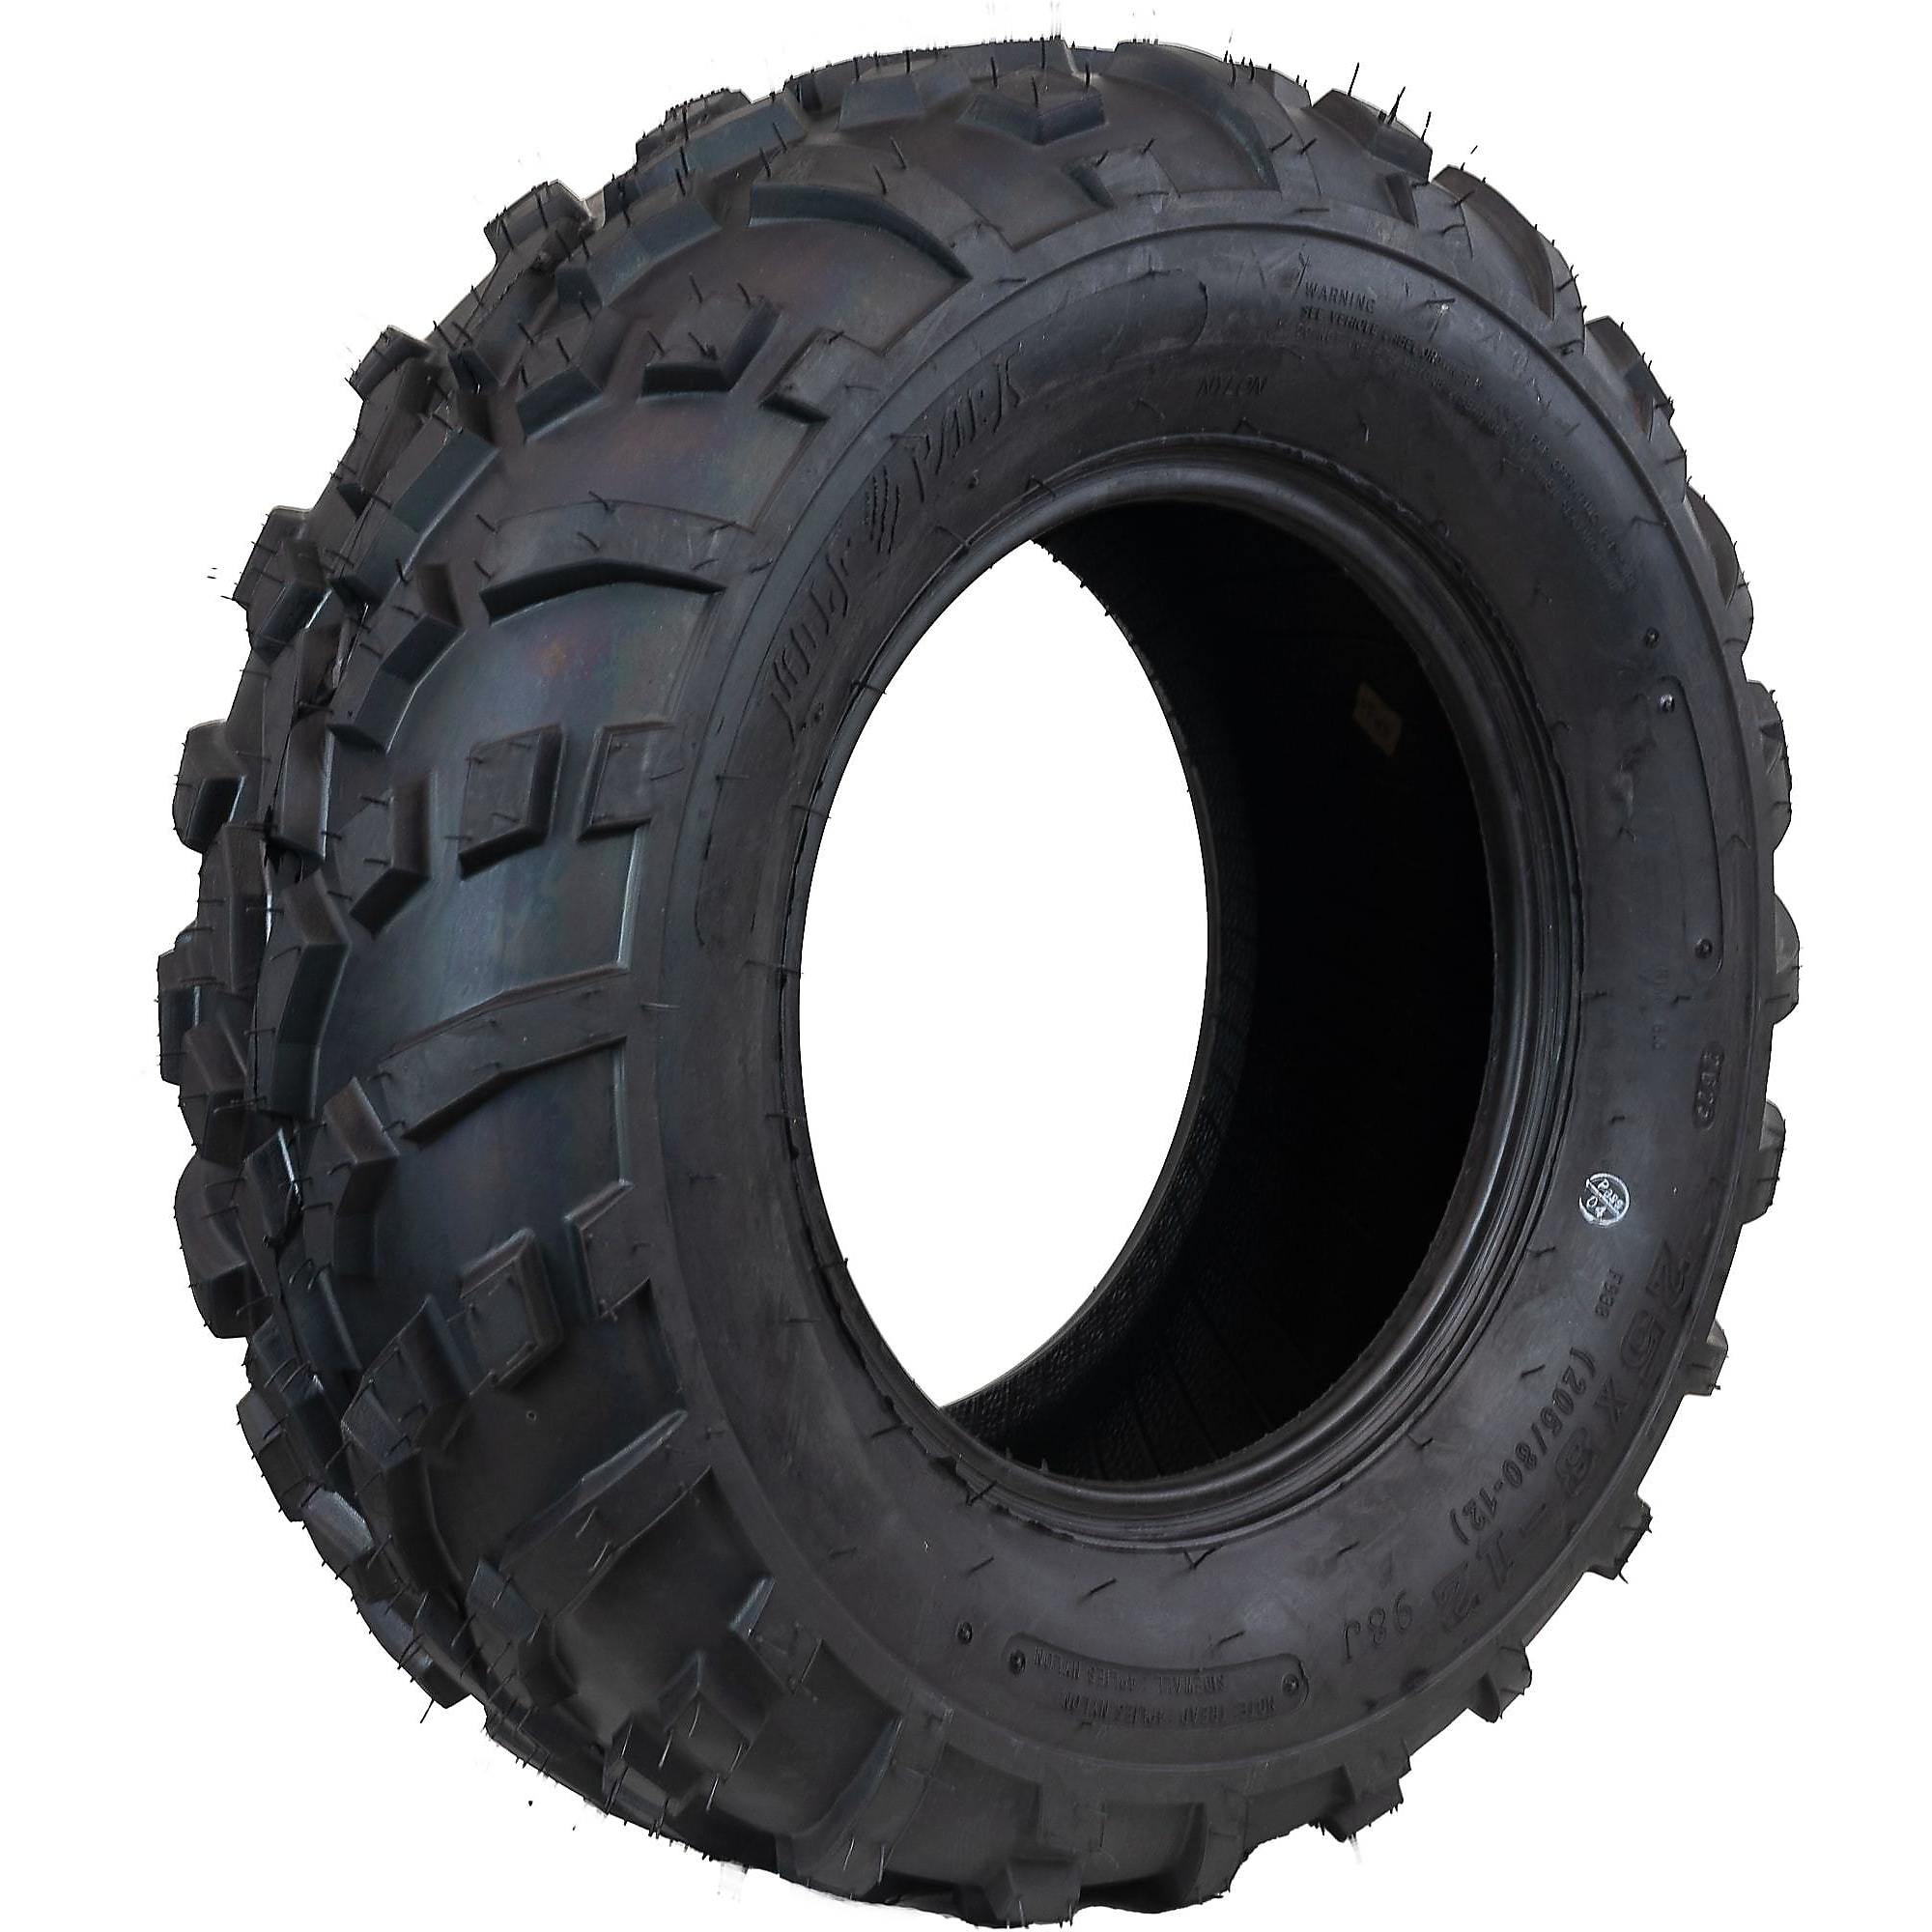 WOLFPACK, ATV/UTV Tire, F938 Tire Size 25x8.00-12 Load Range Rating C, Model WP2001